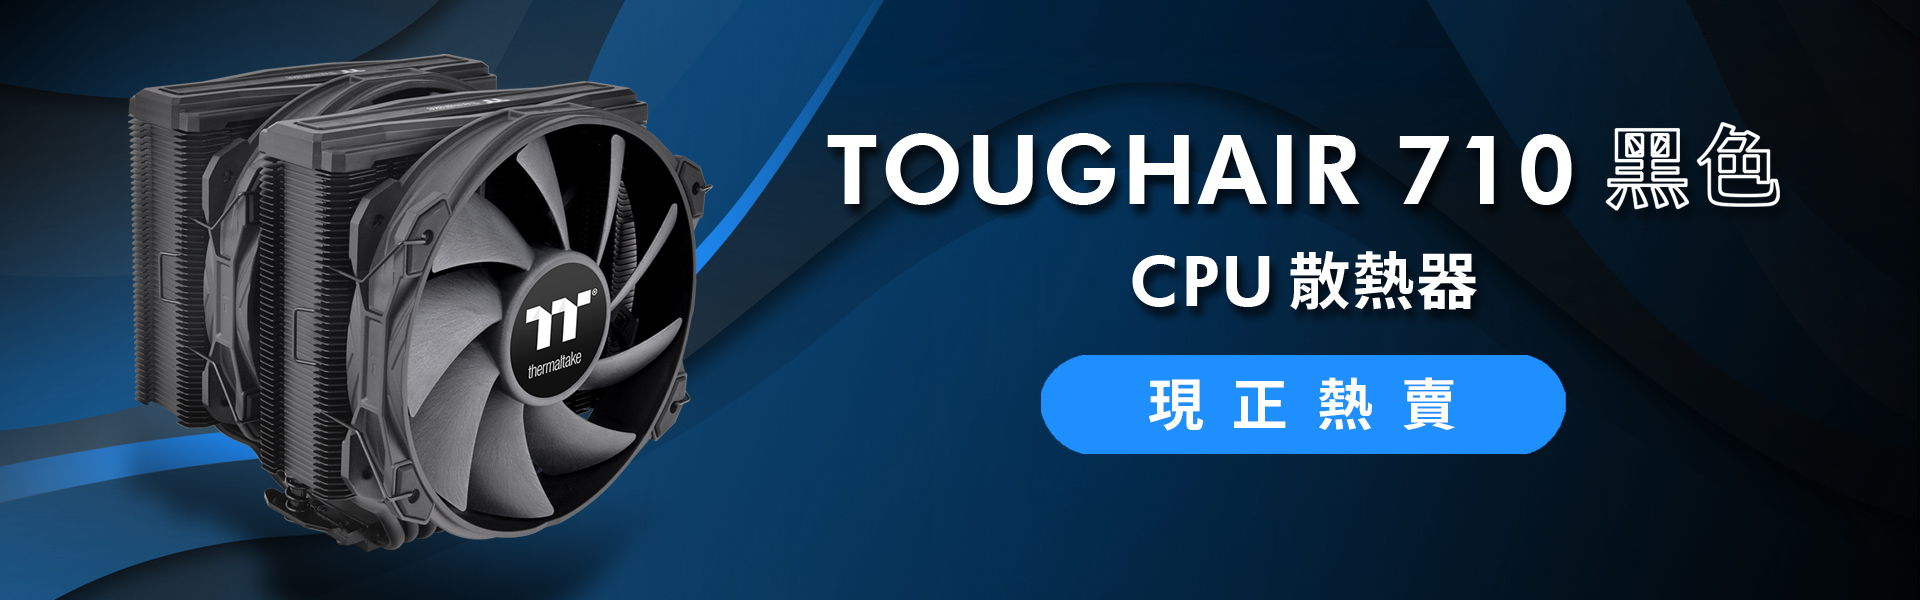 TOUGHAIR 710 Black CPU Cooler